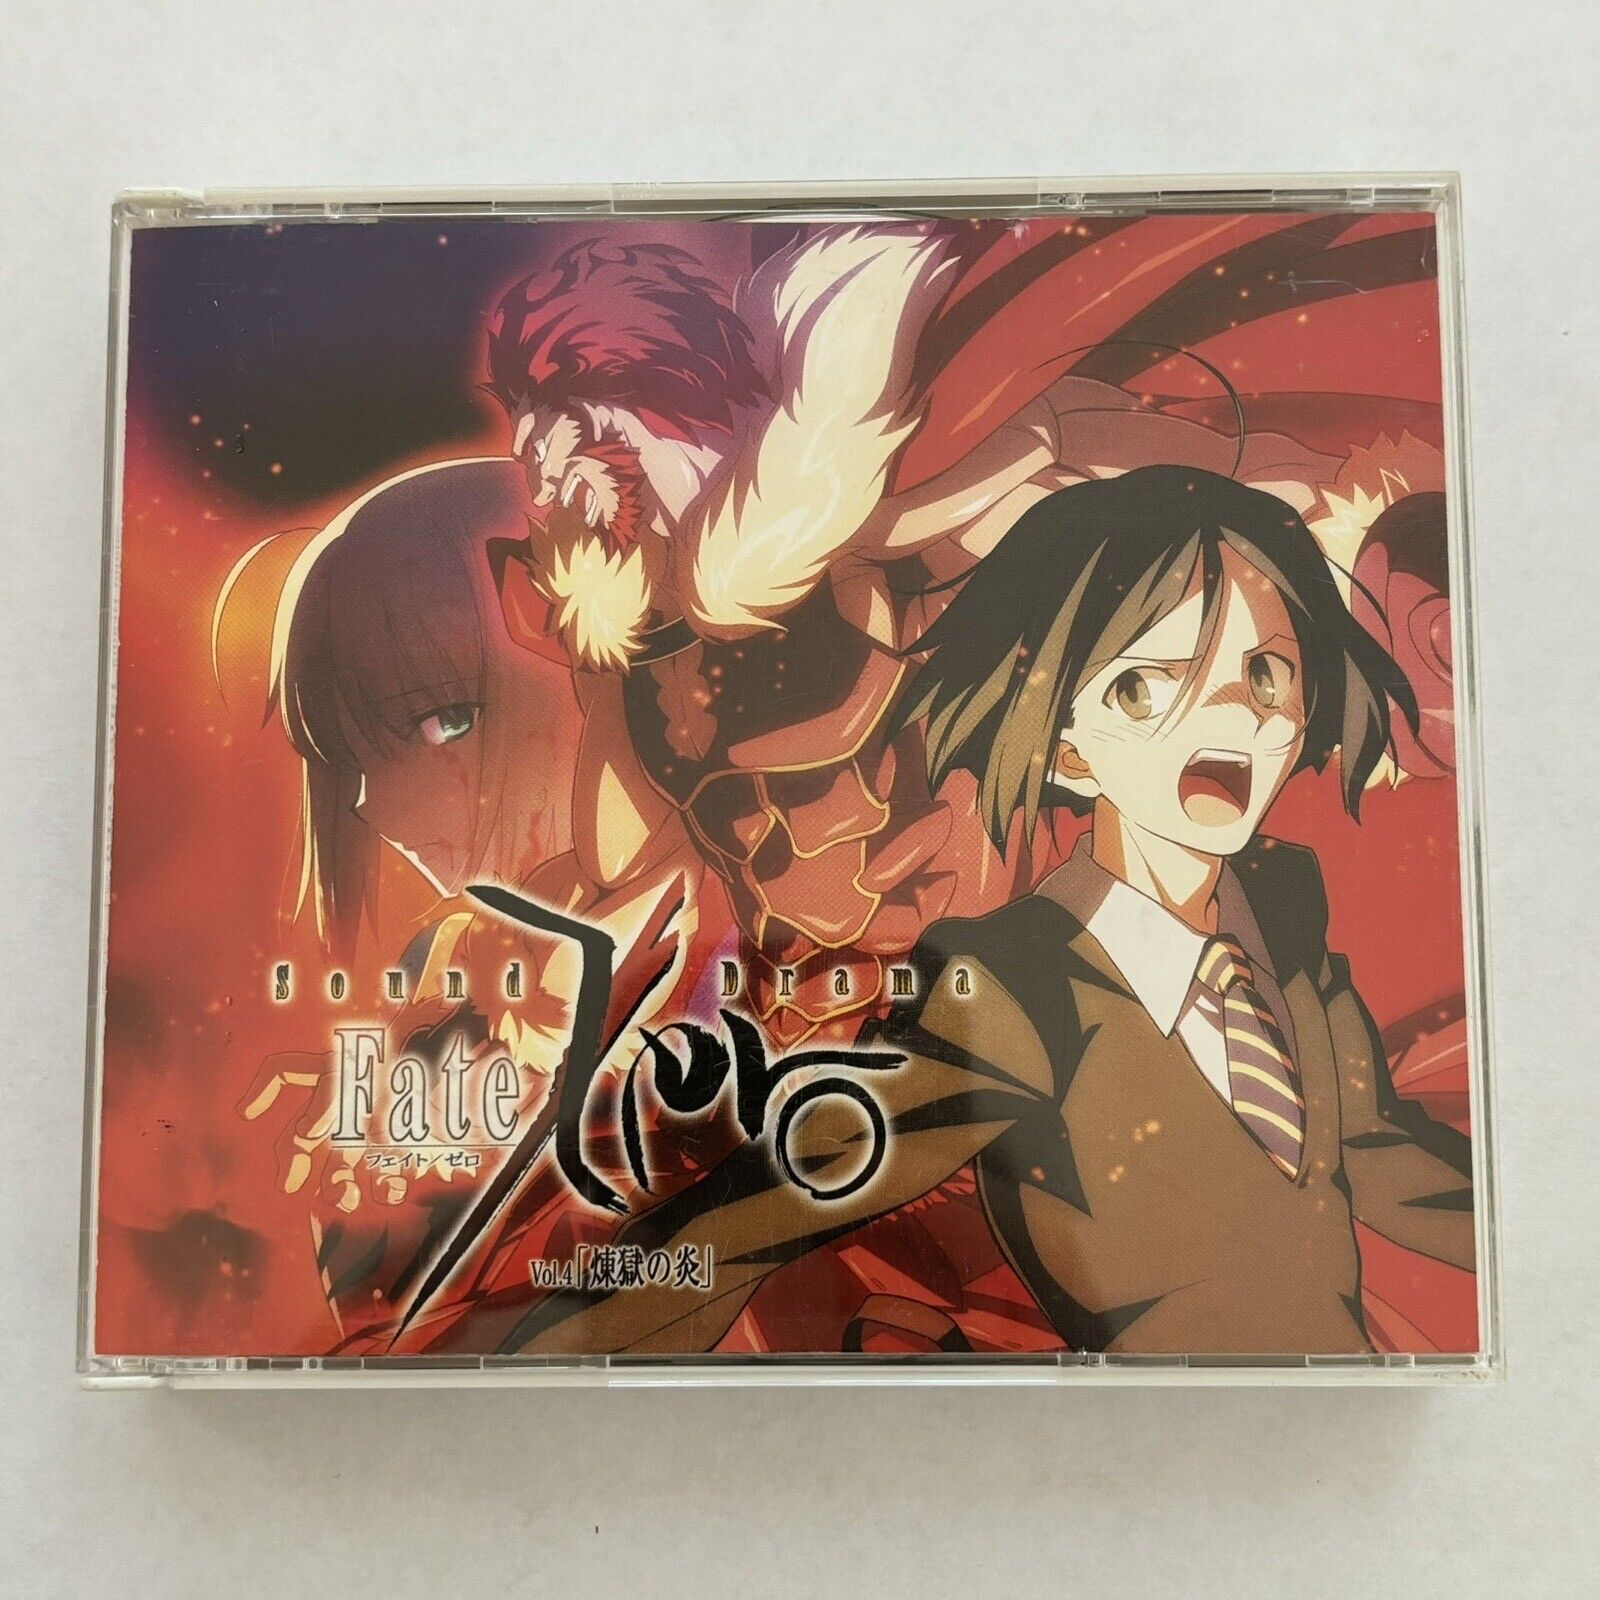 SOUND DRAMA Fate/zero vol.4 CD Rare Anime Japan Import HBDC-066